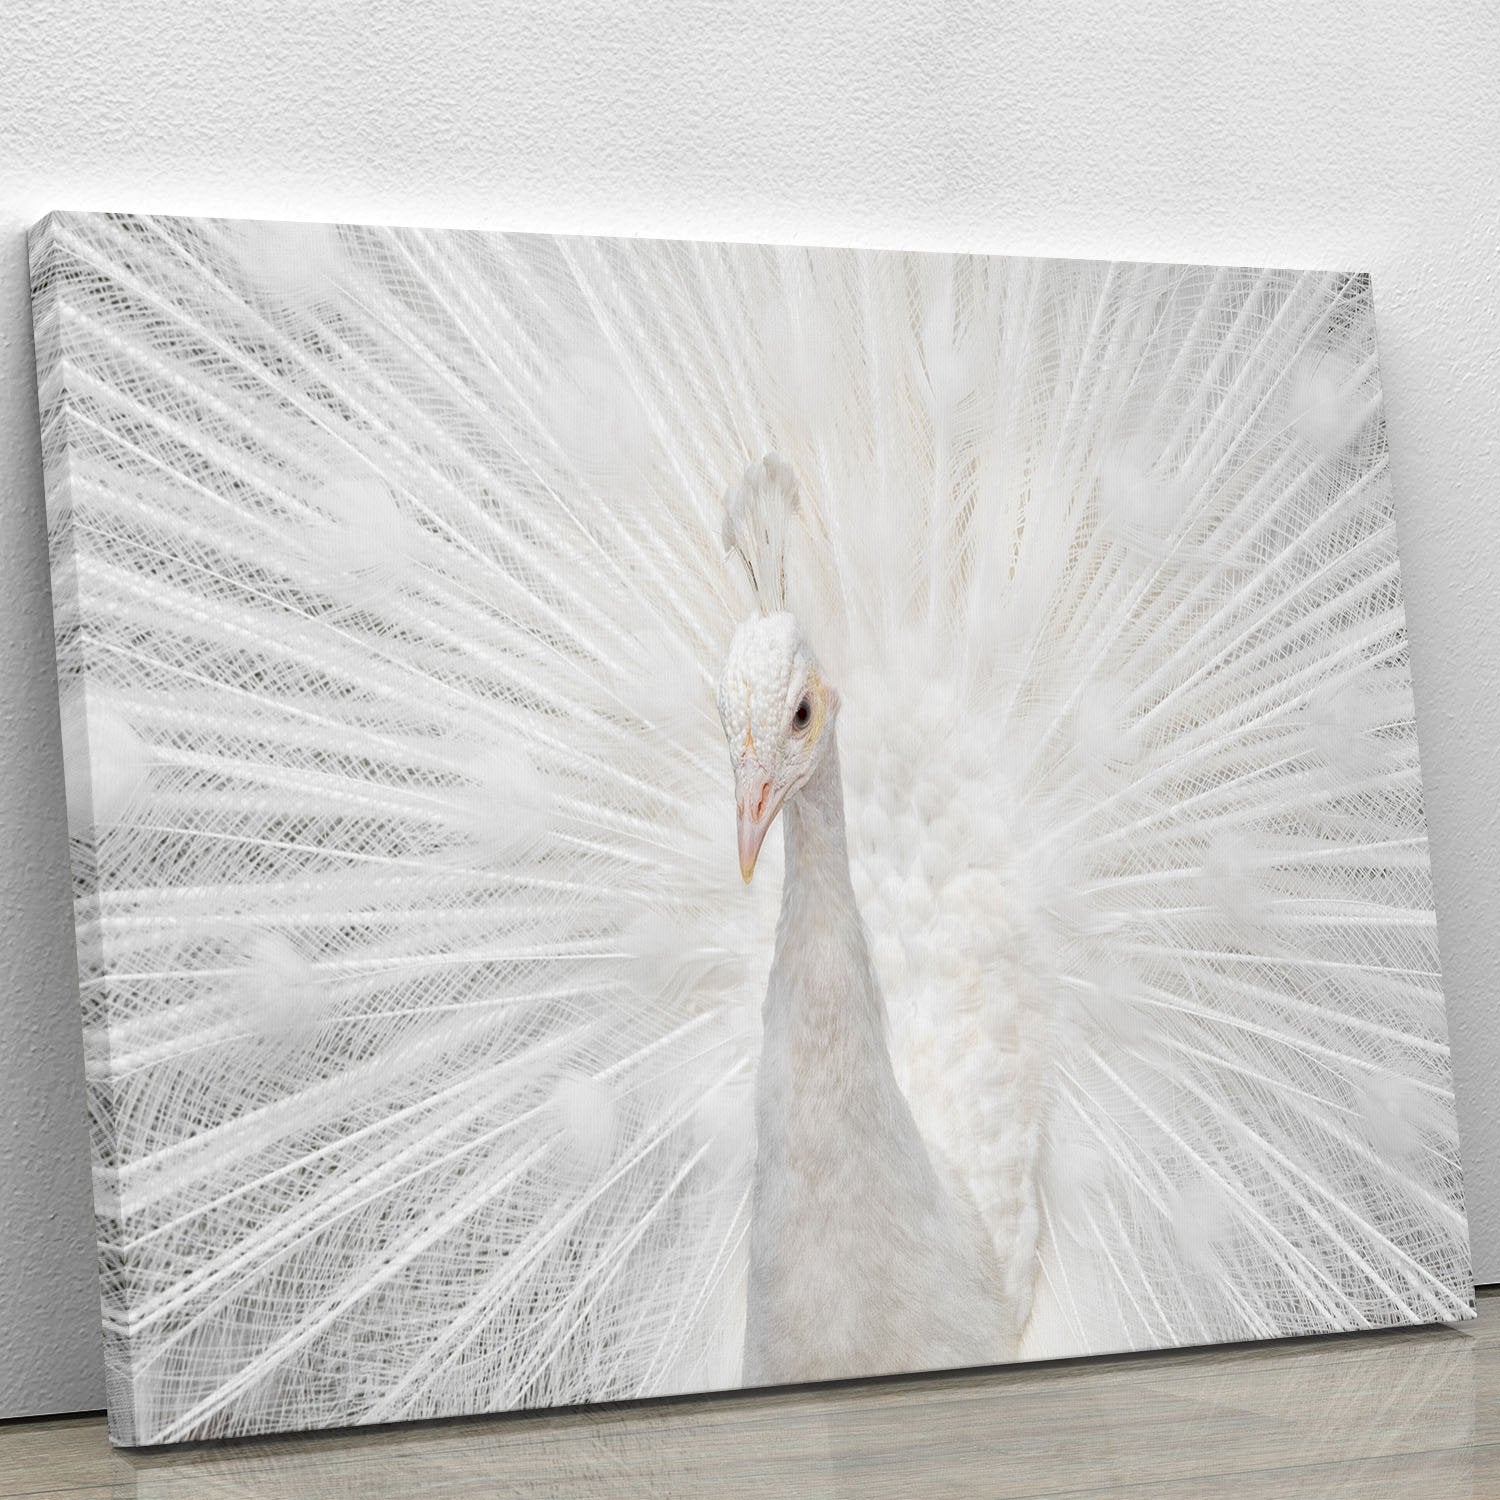 Splendid Whitie Peacock Canvas Print or Poster - Canvas Art Rocks - 1